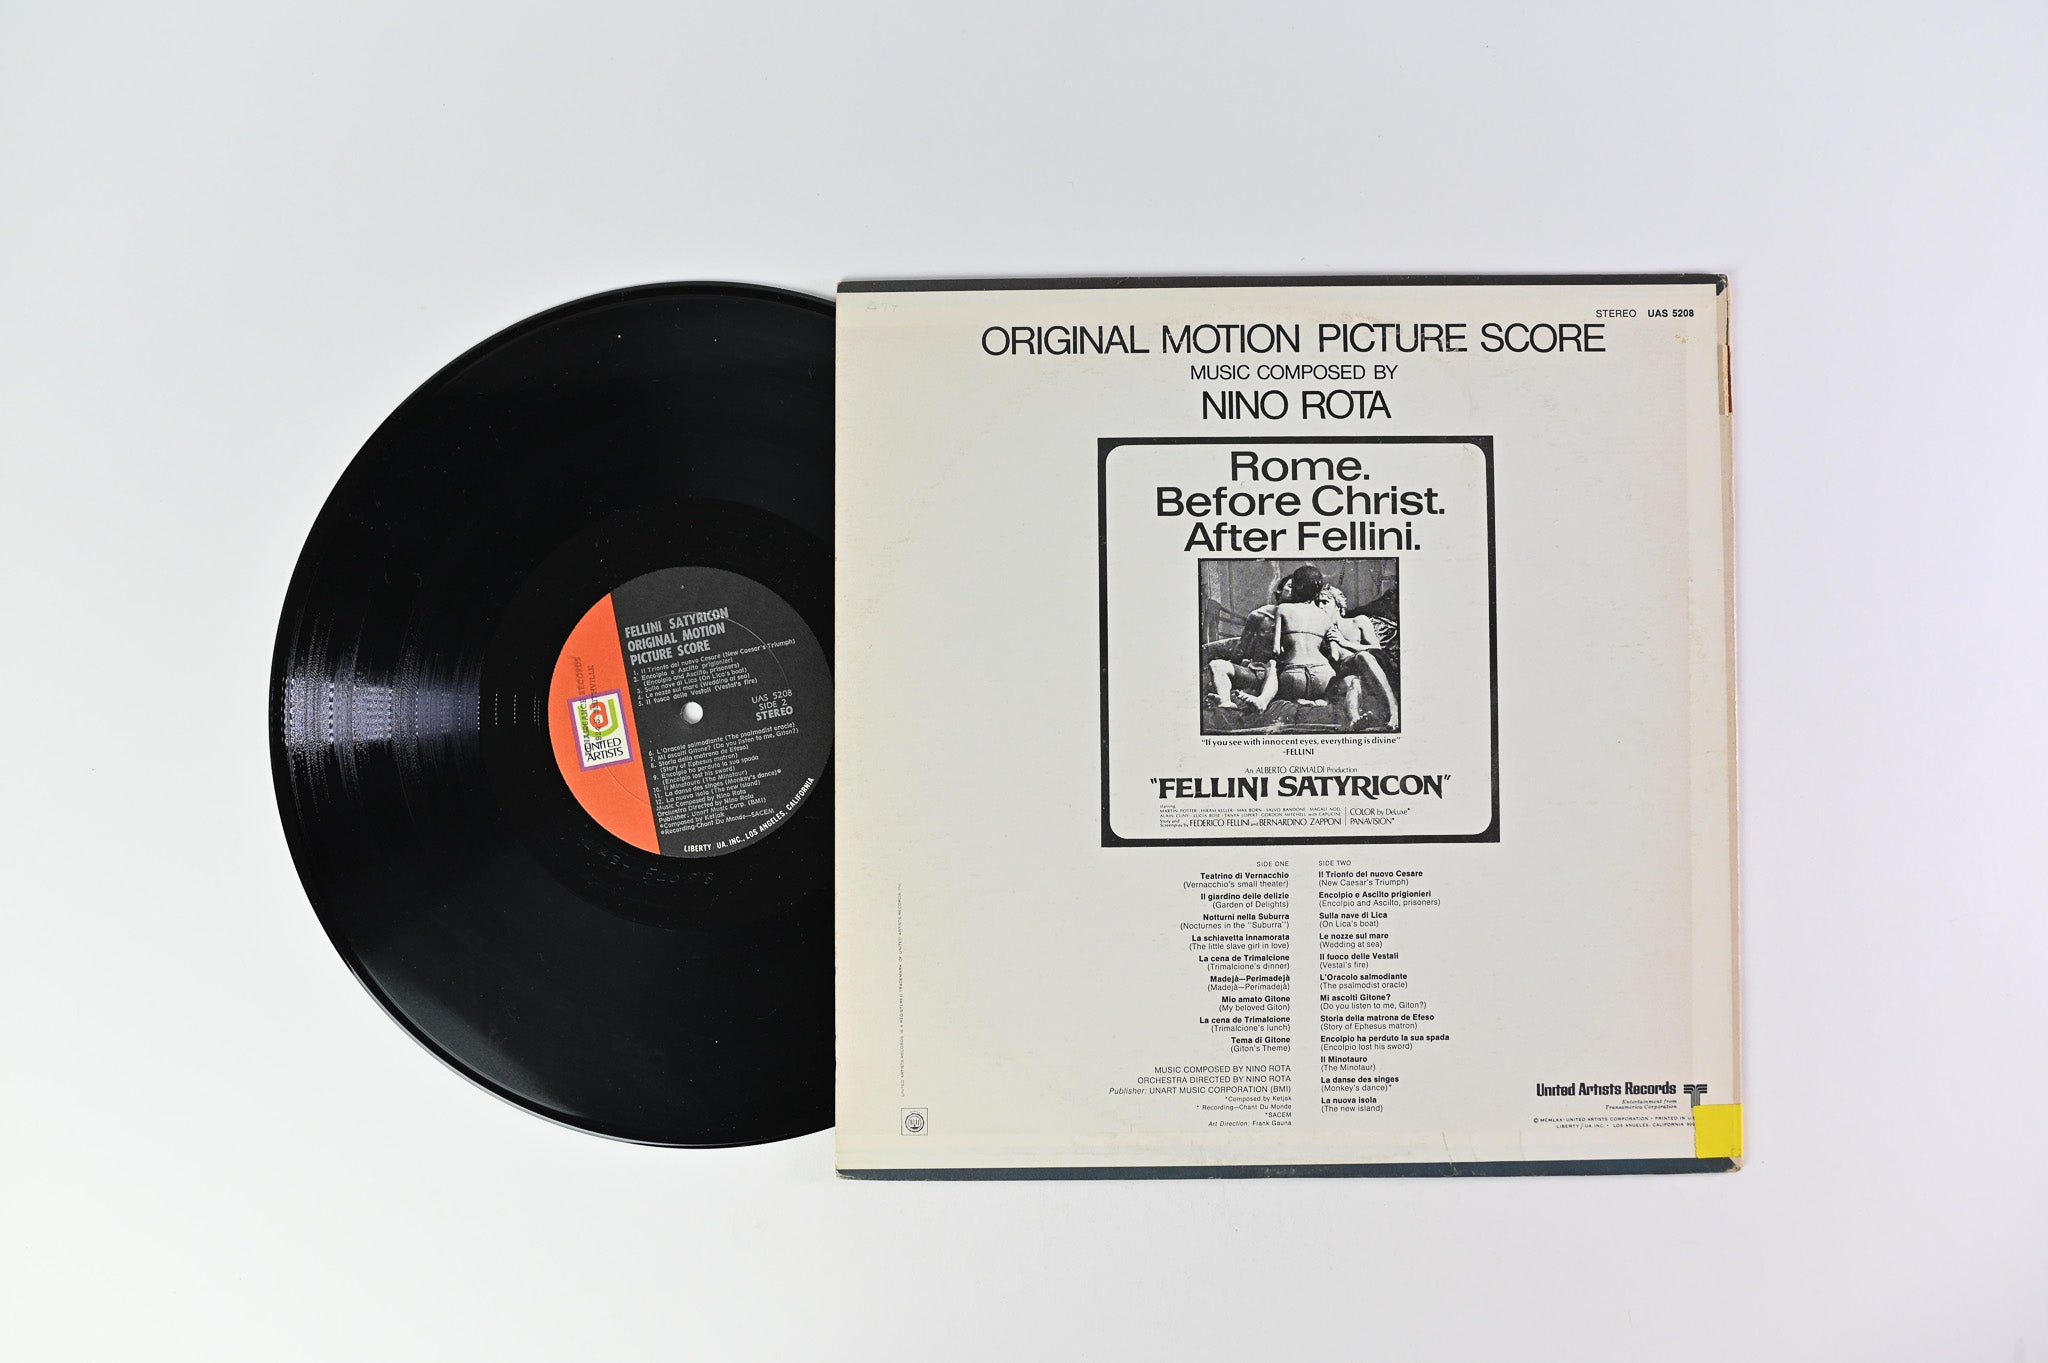 Nino Rota - Fellini Satyricon (Original Motion Picture Score) on United Artists Records